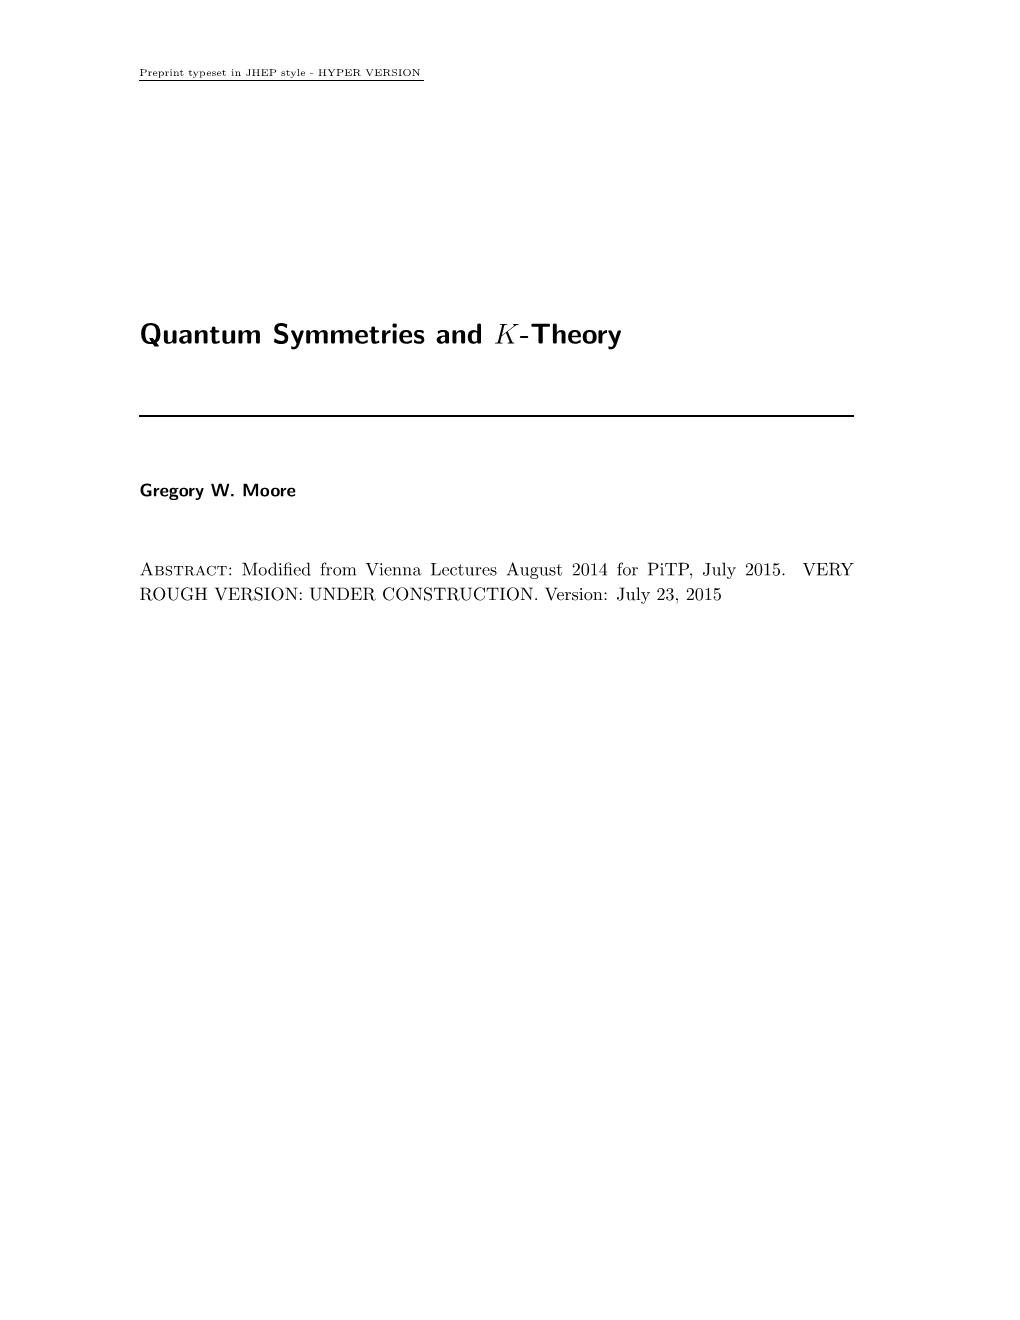 Quantum Symmetries and K-Theory